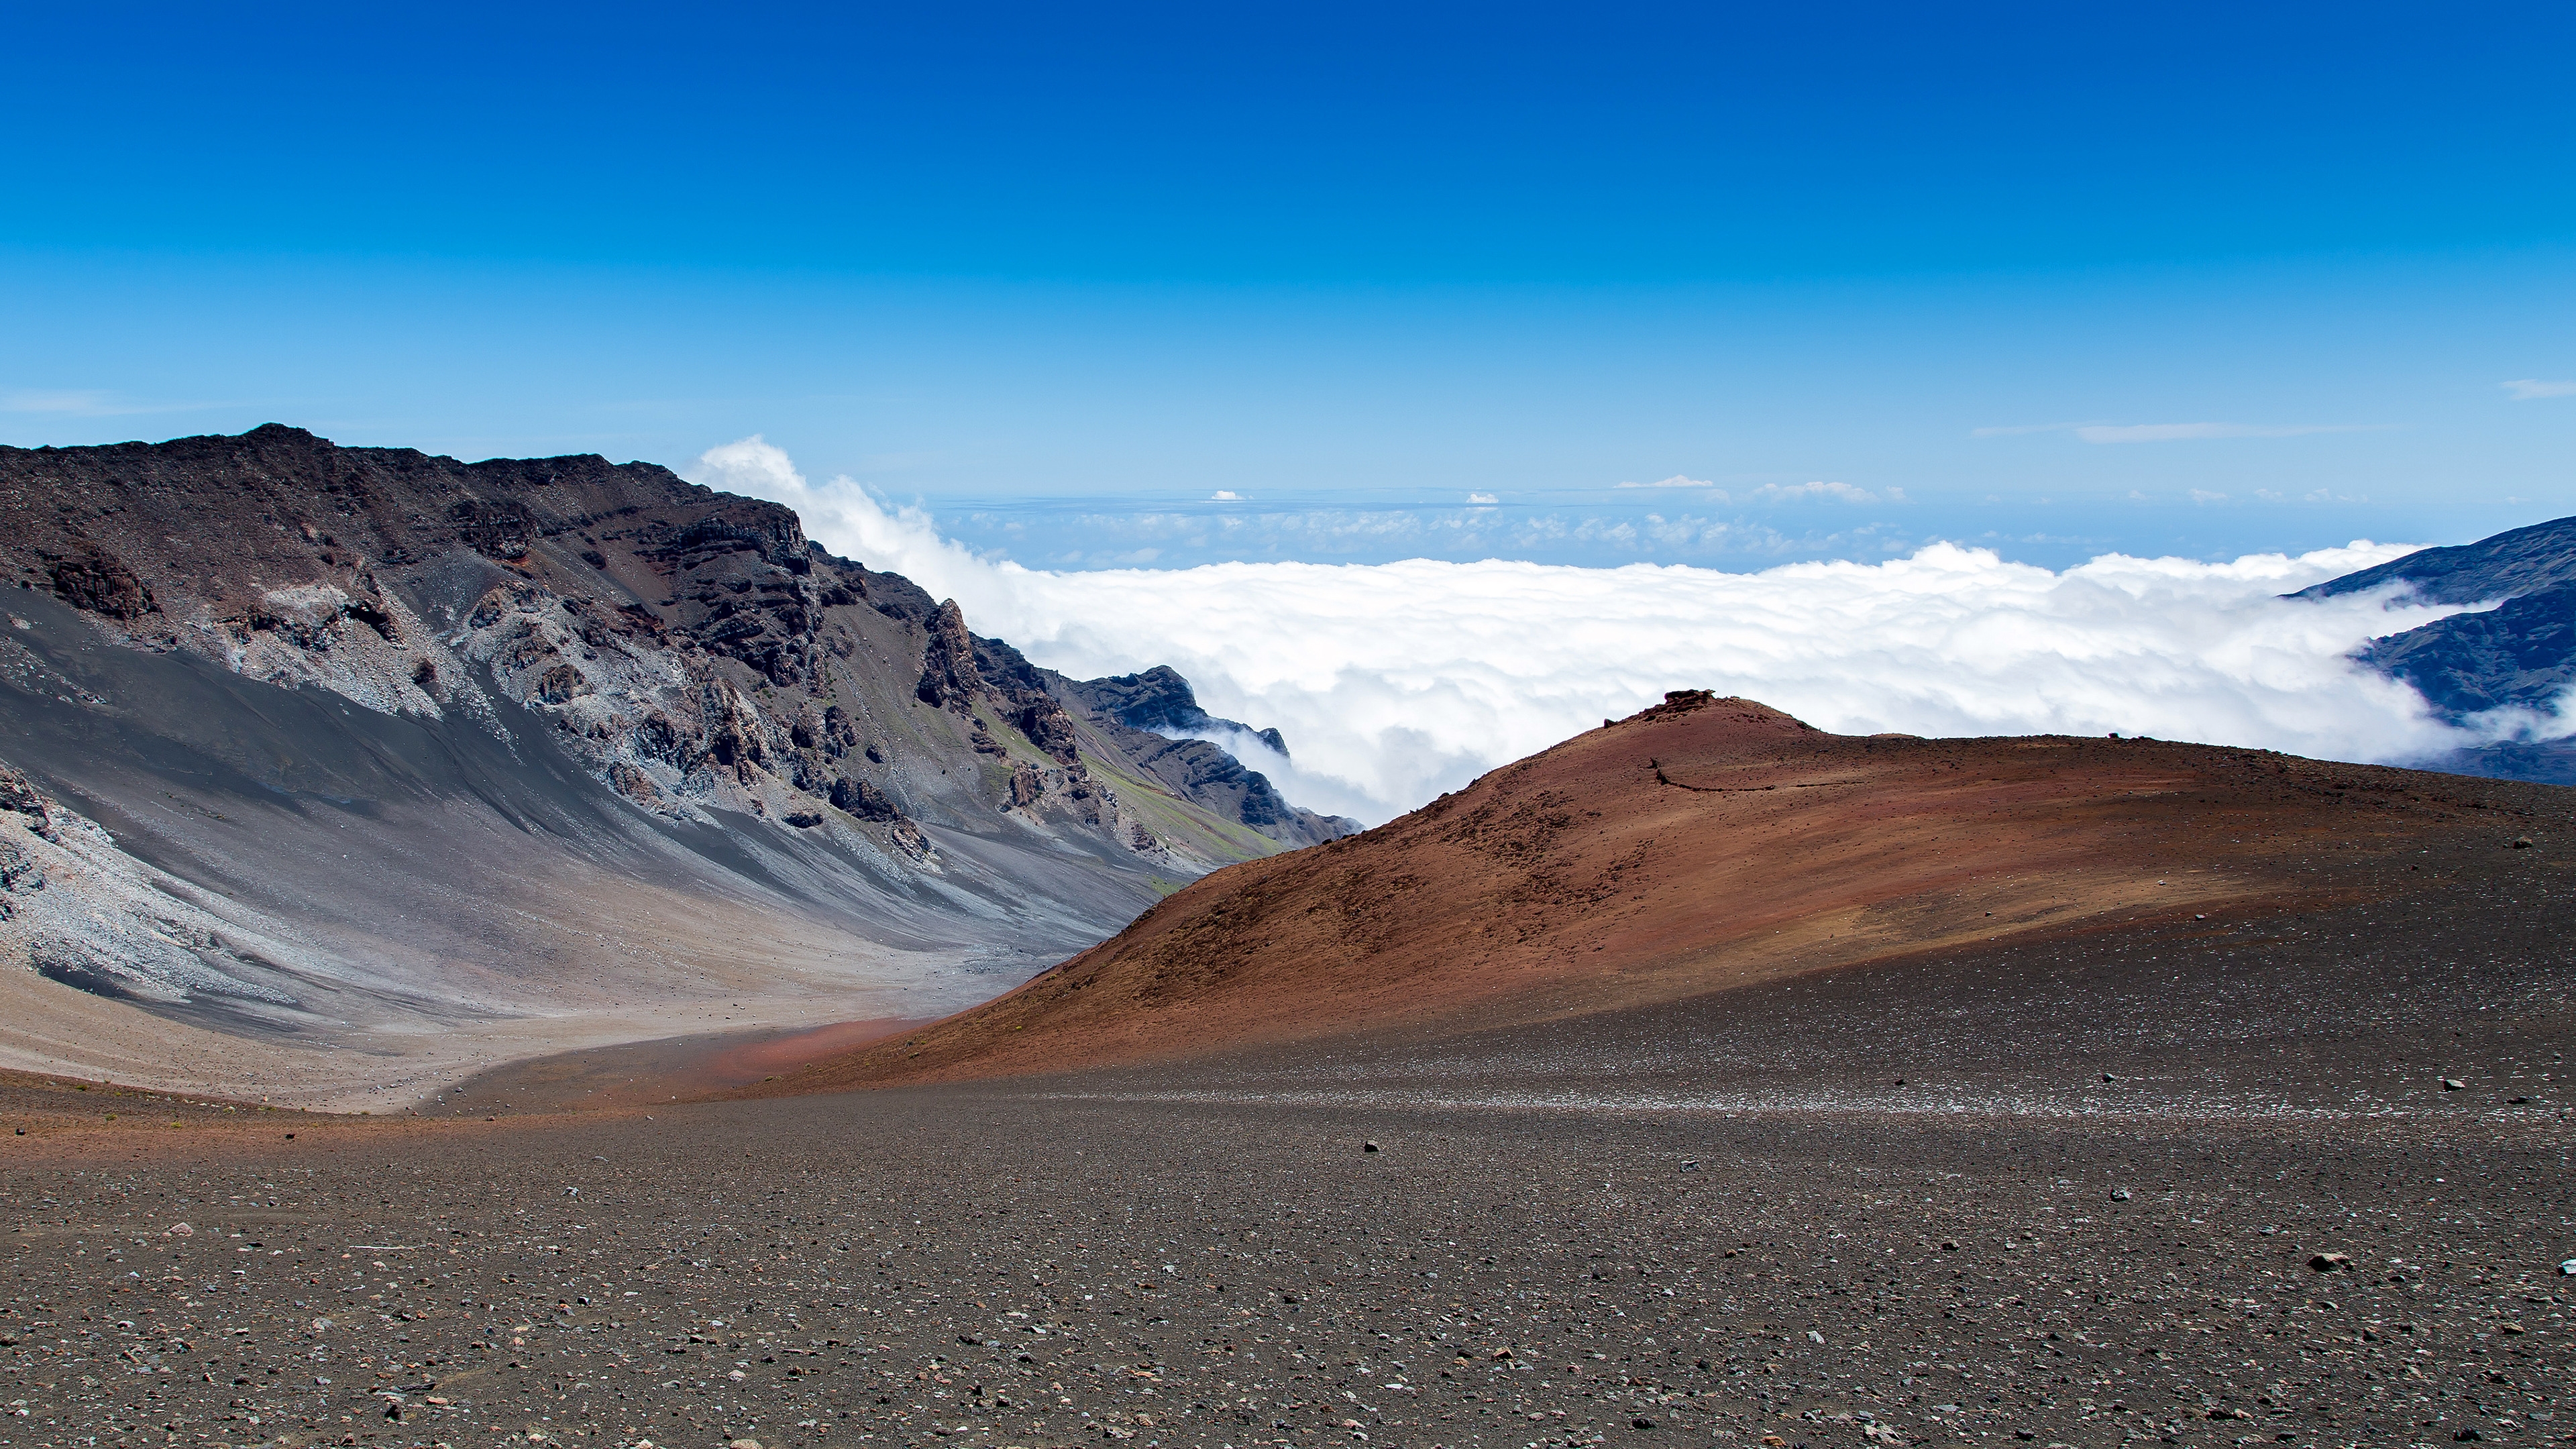 Haleakala View for 3840 x 2160 Ultra HD resolution